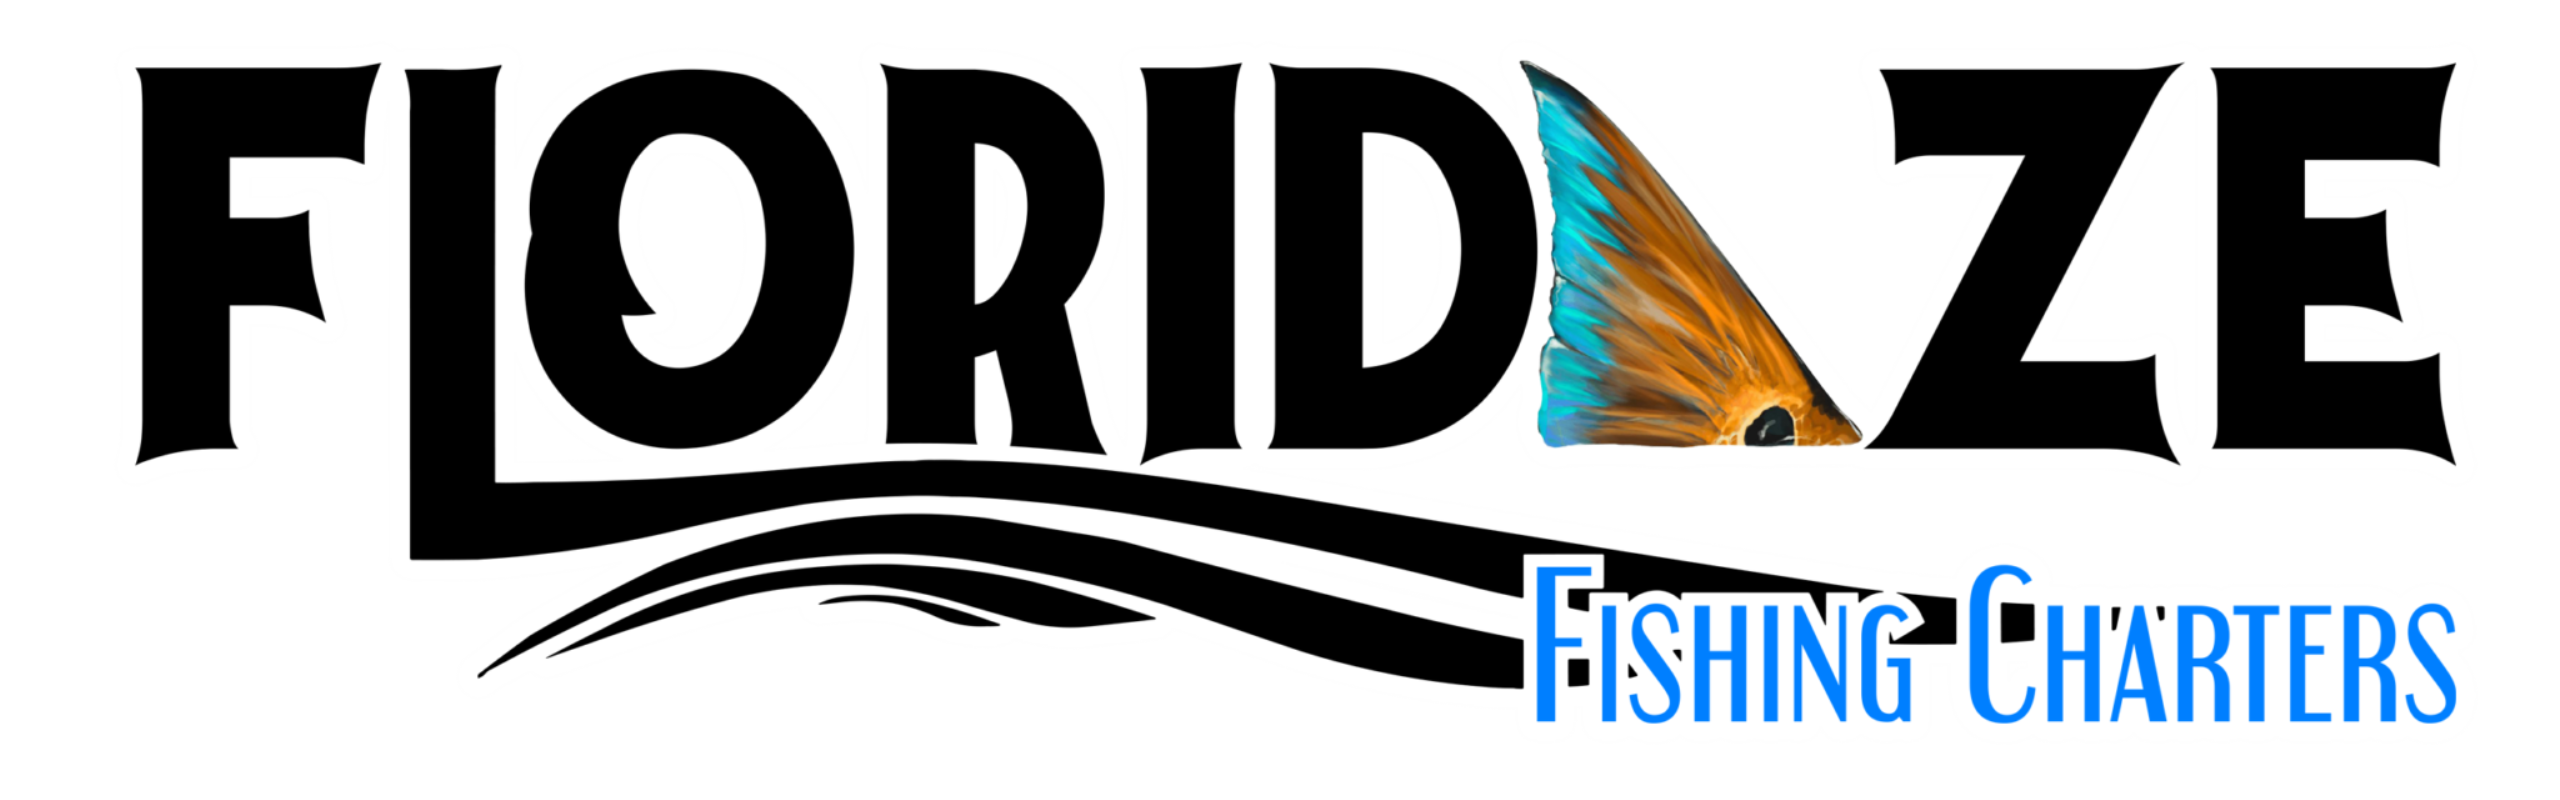 Floridaze Fishing Charter Logo